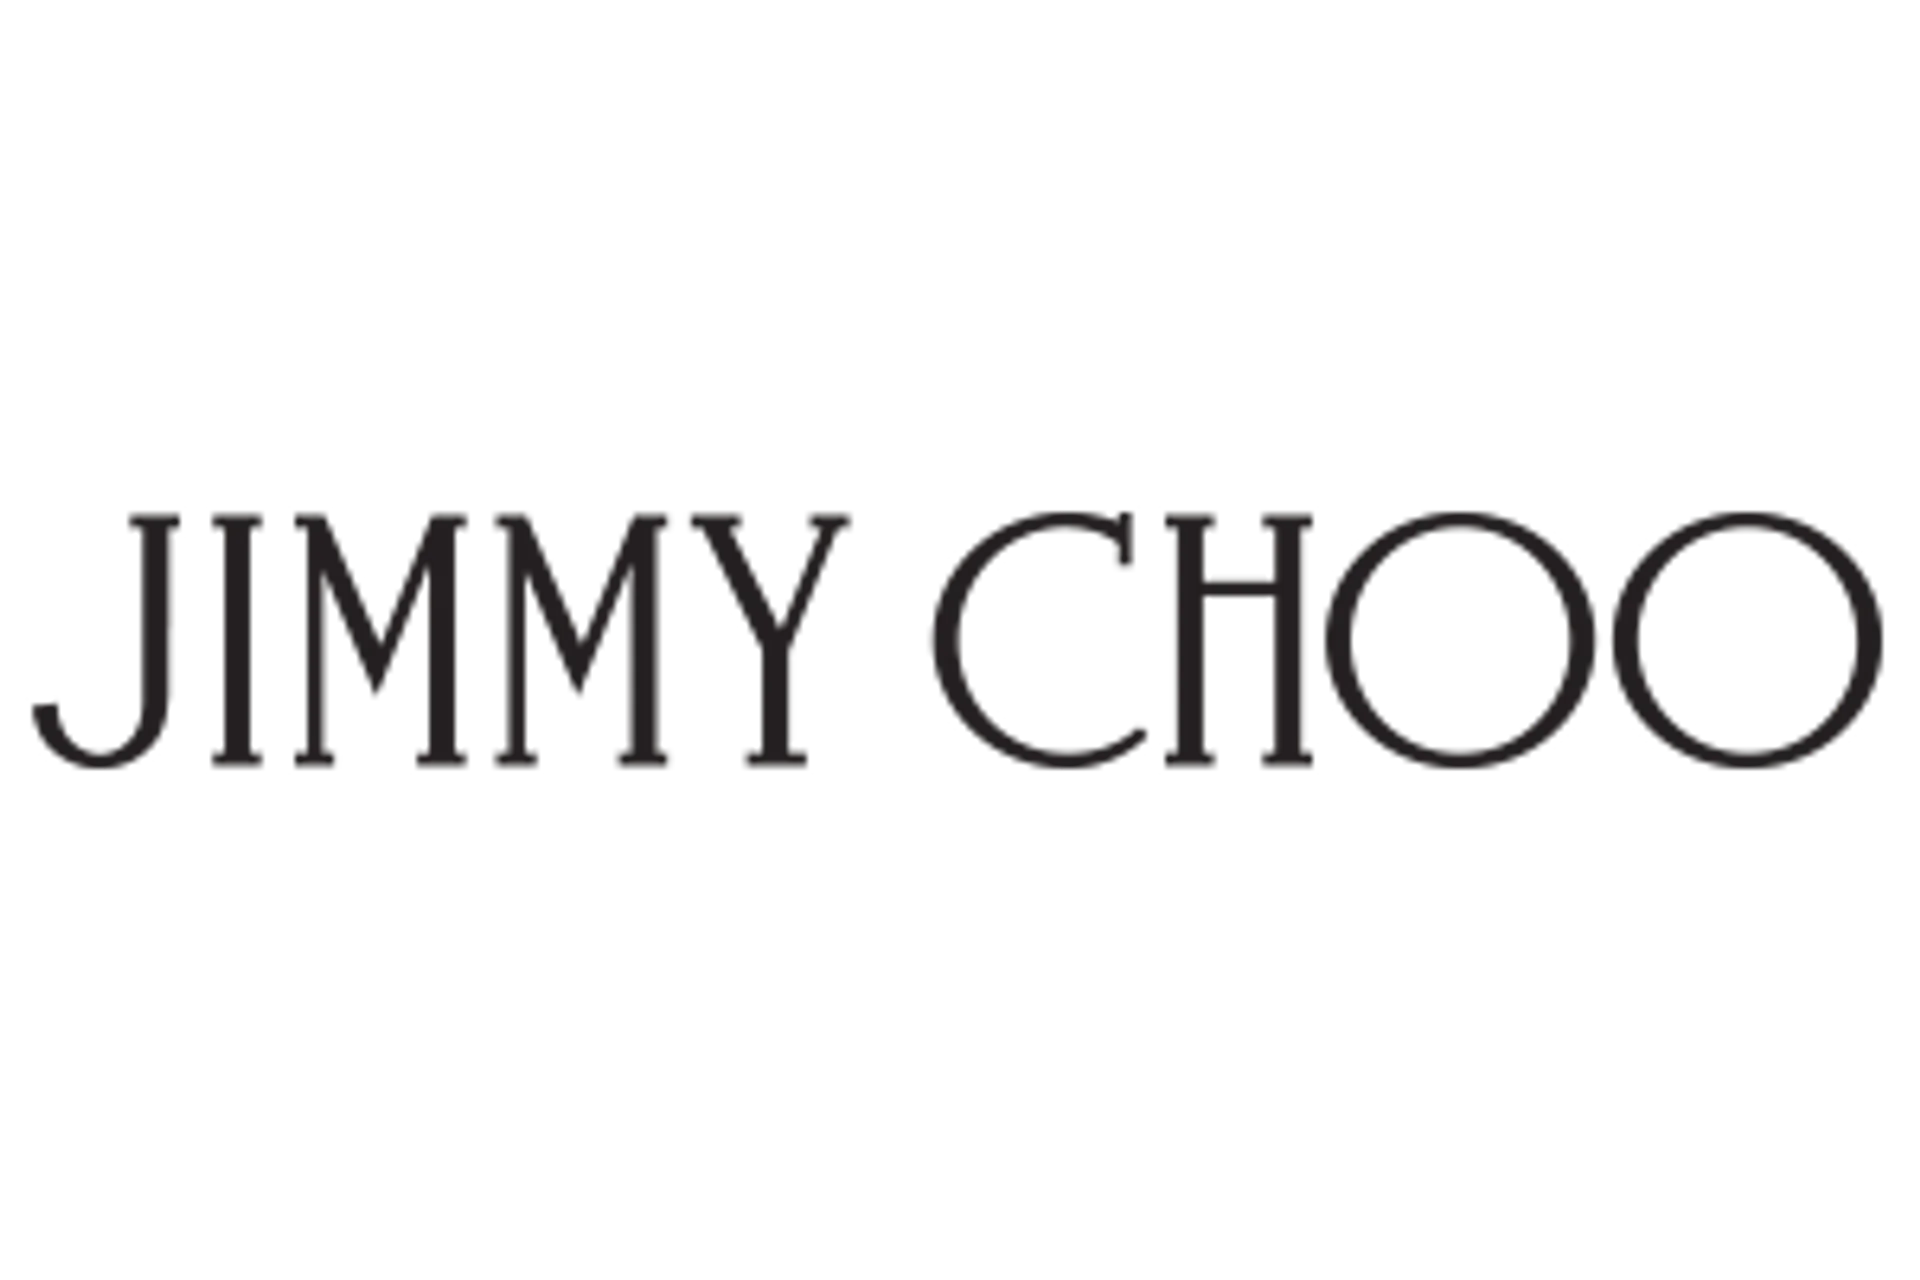 JIMMY CHOO logo